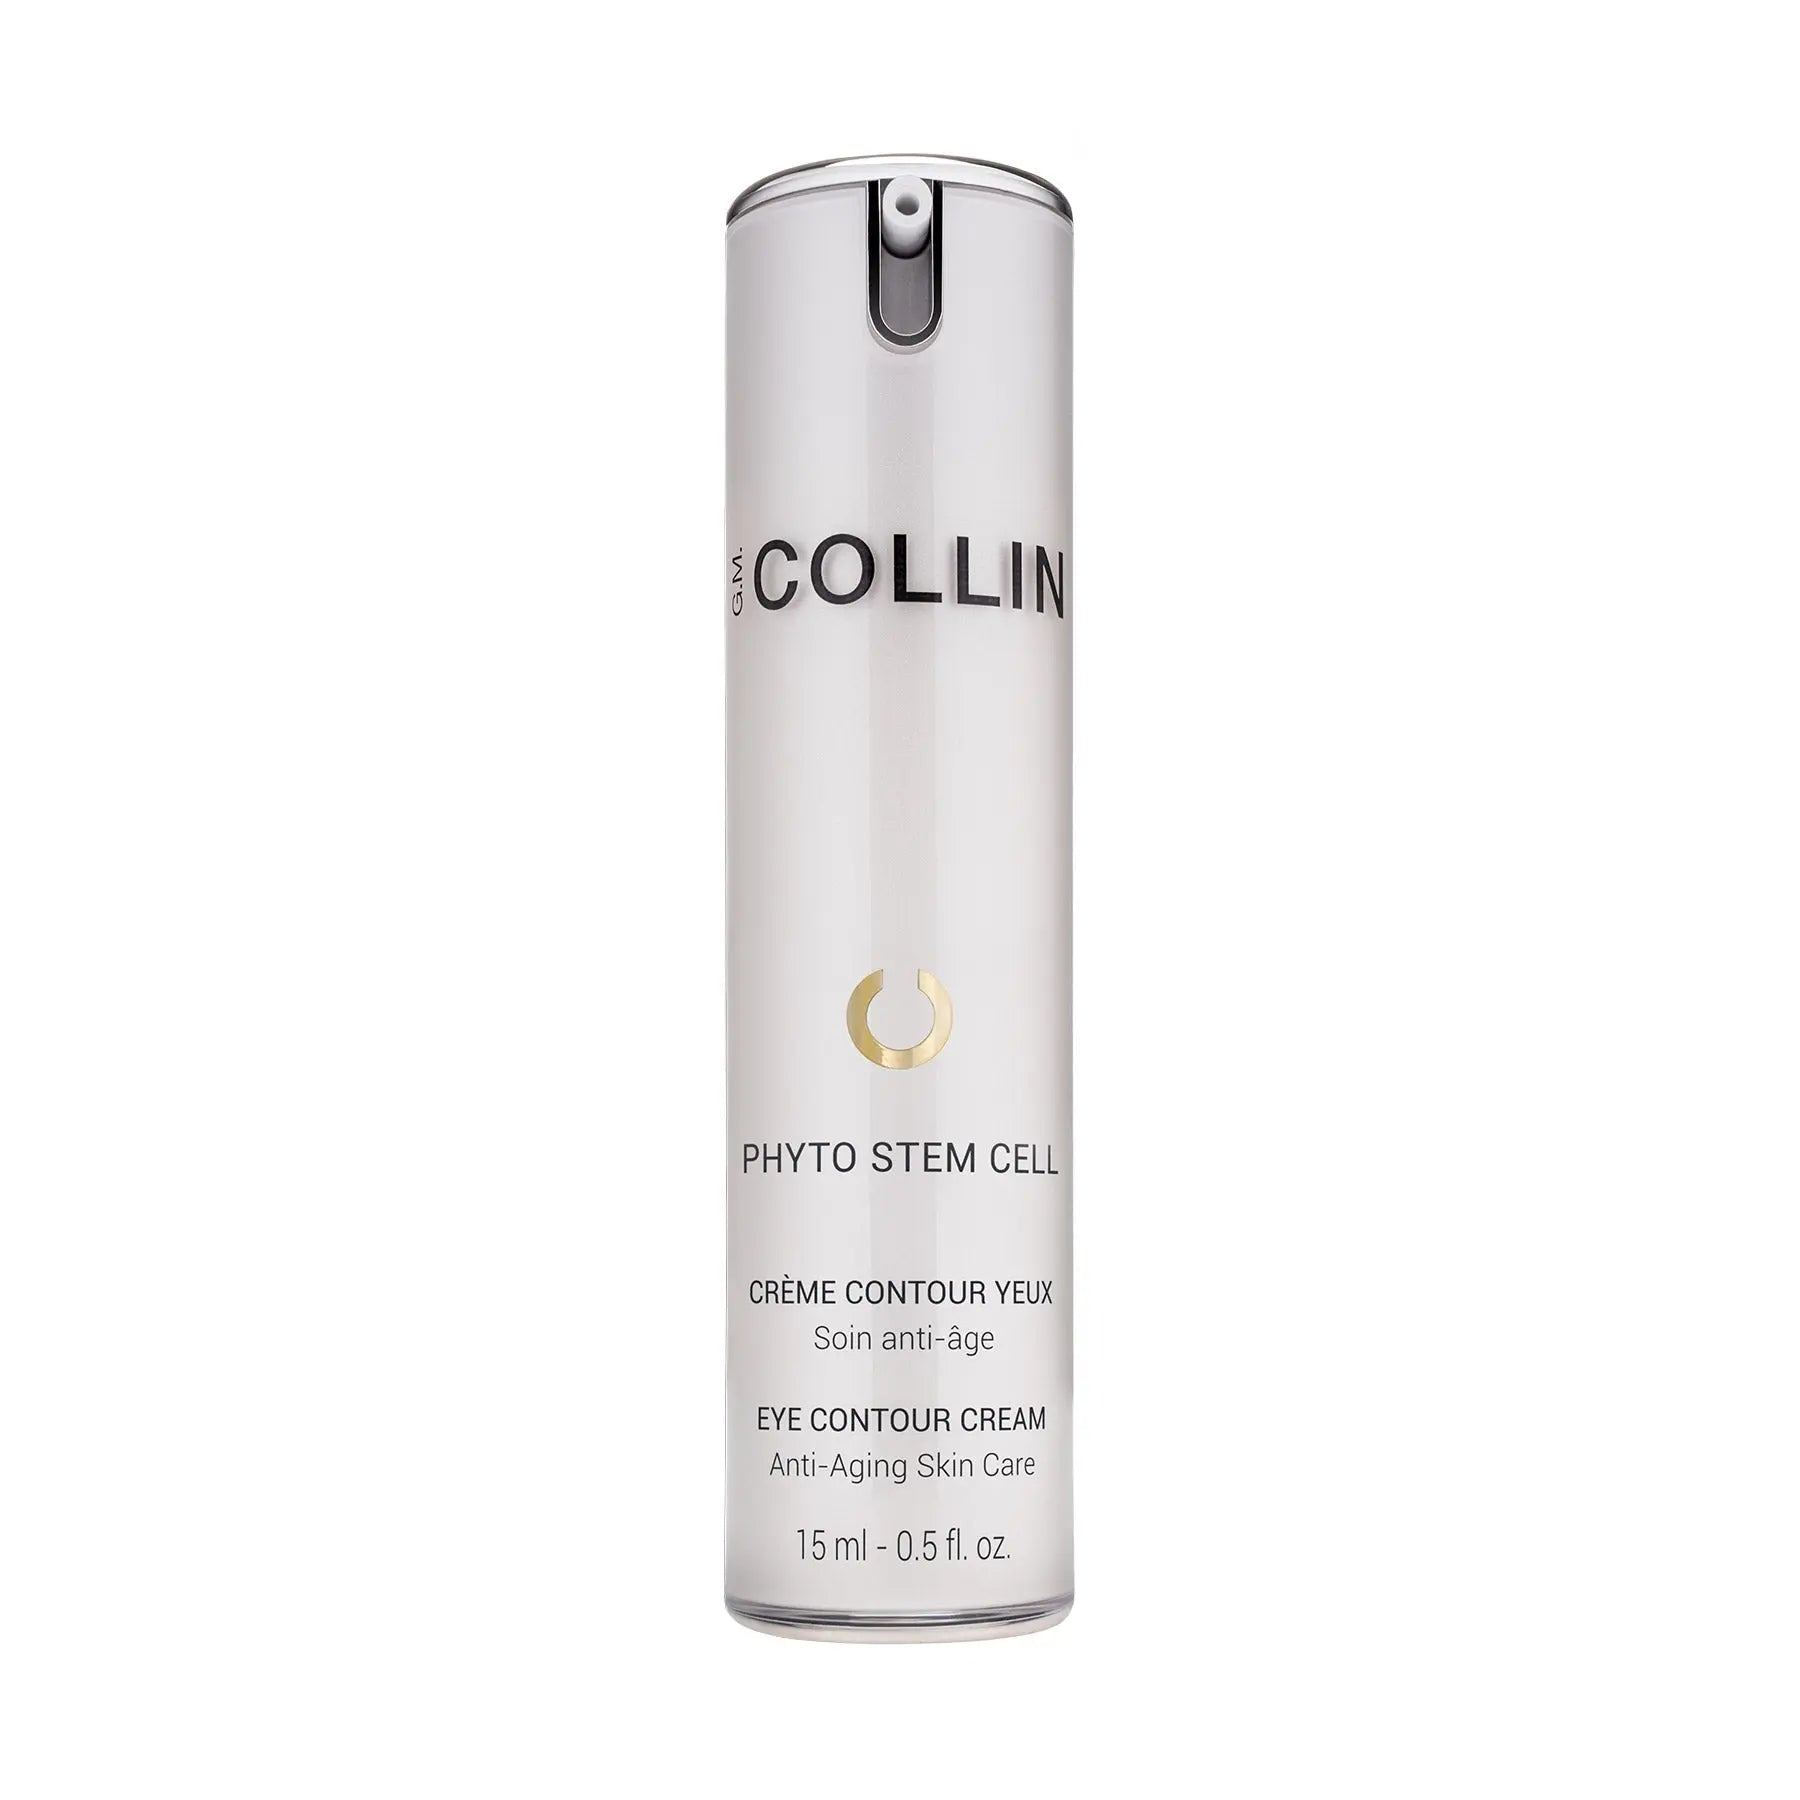 G.M Collin Phyto Stem Cell + Eye Contour Cream